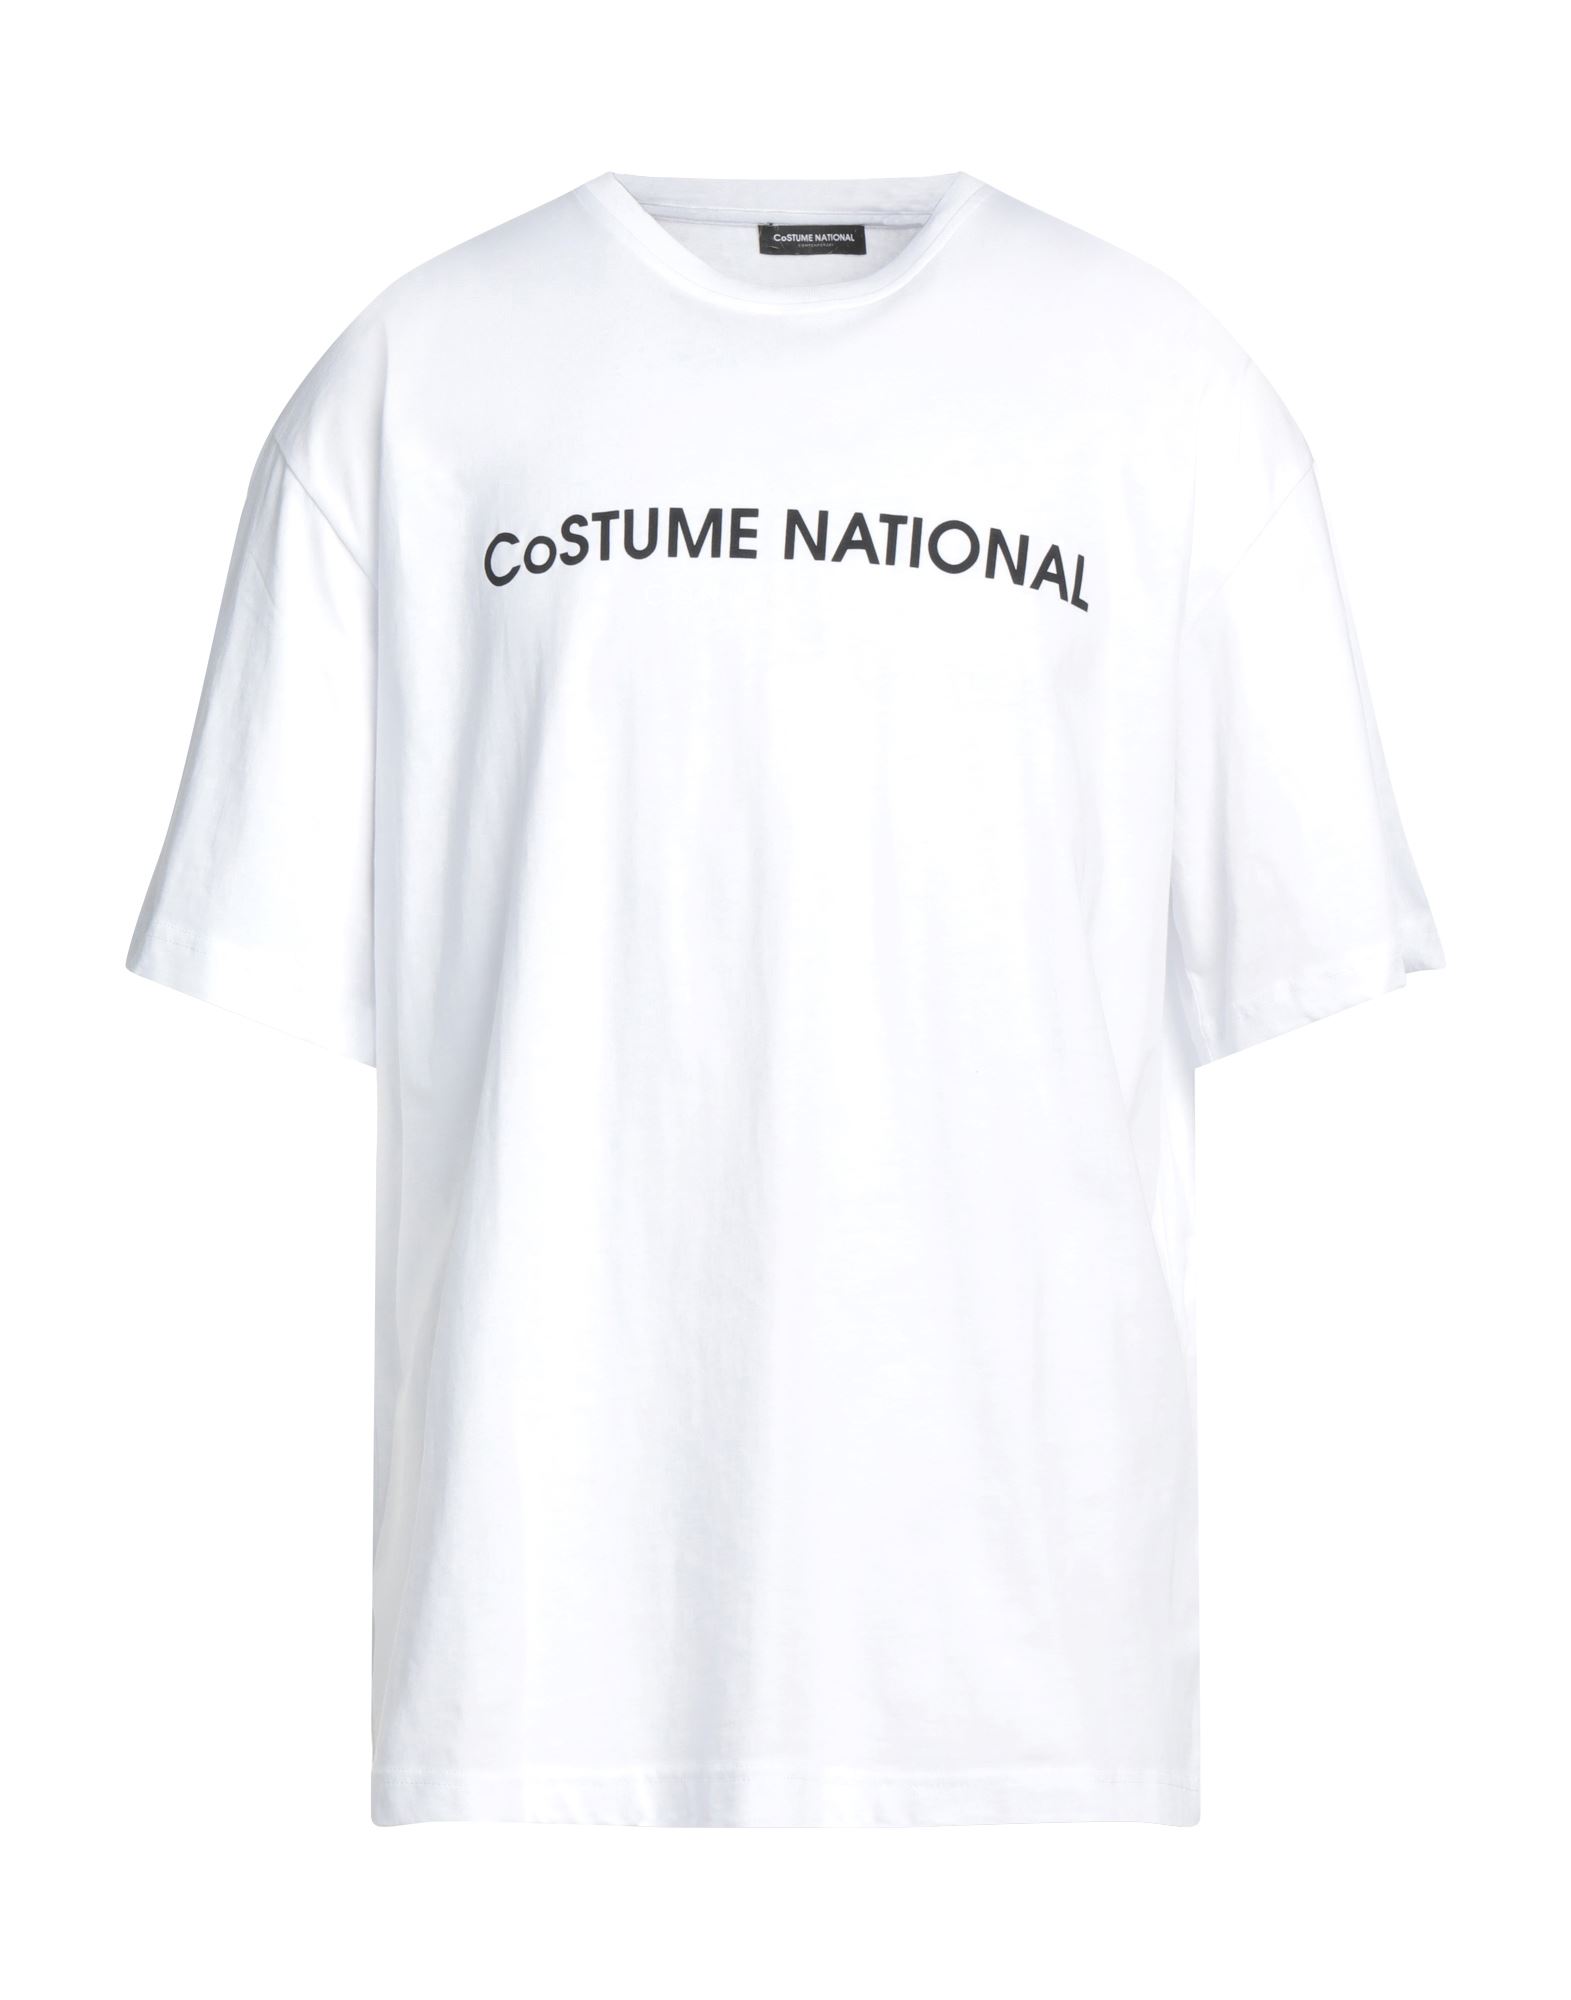 COSTUME NATIONAL COSTUME NATIONAL MAN T-SHIRT WHITE SIZE XXL COTTON